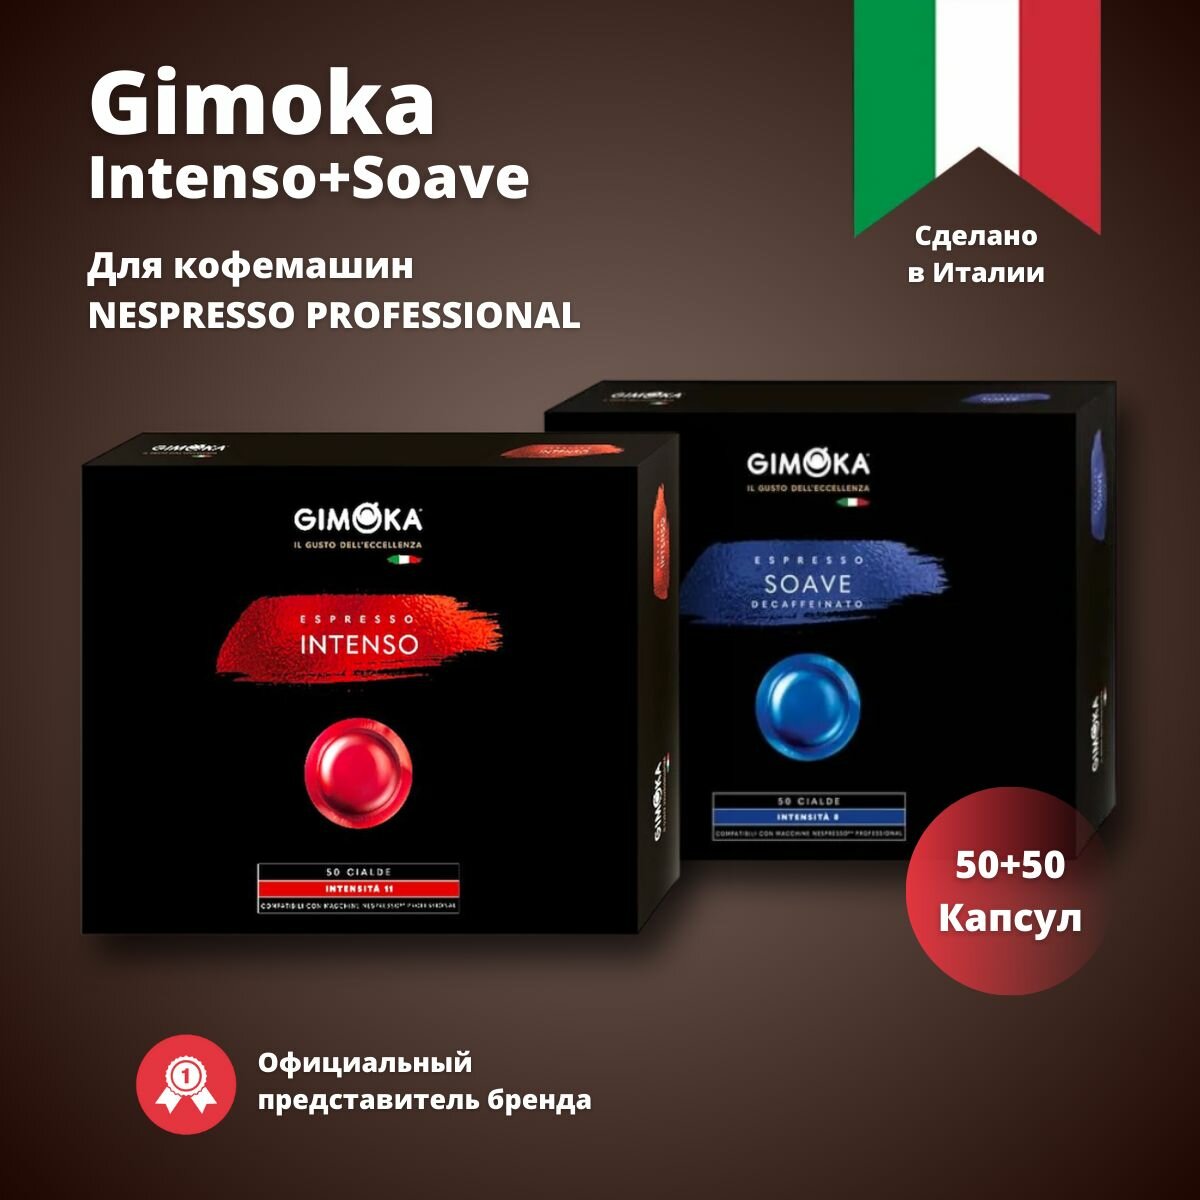 Кофе в капсулах Gimoka Intenso+Soave,2 упаковки по 50 шт. для кофемашин Nespresso Professional